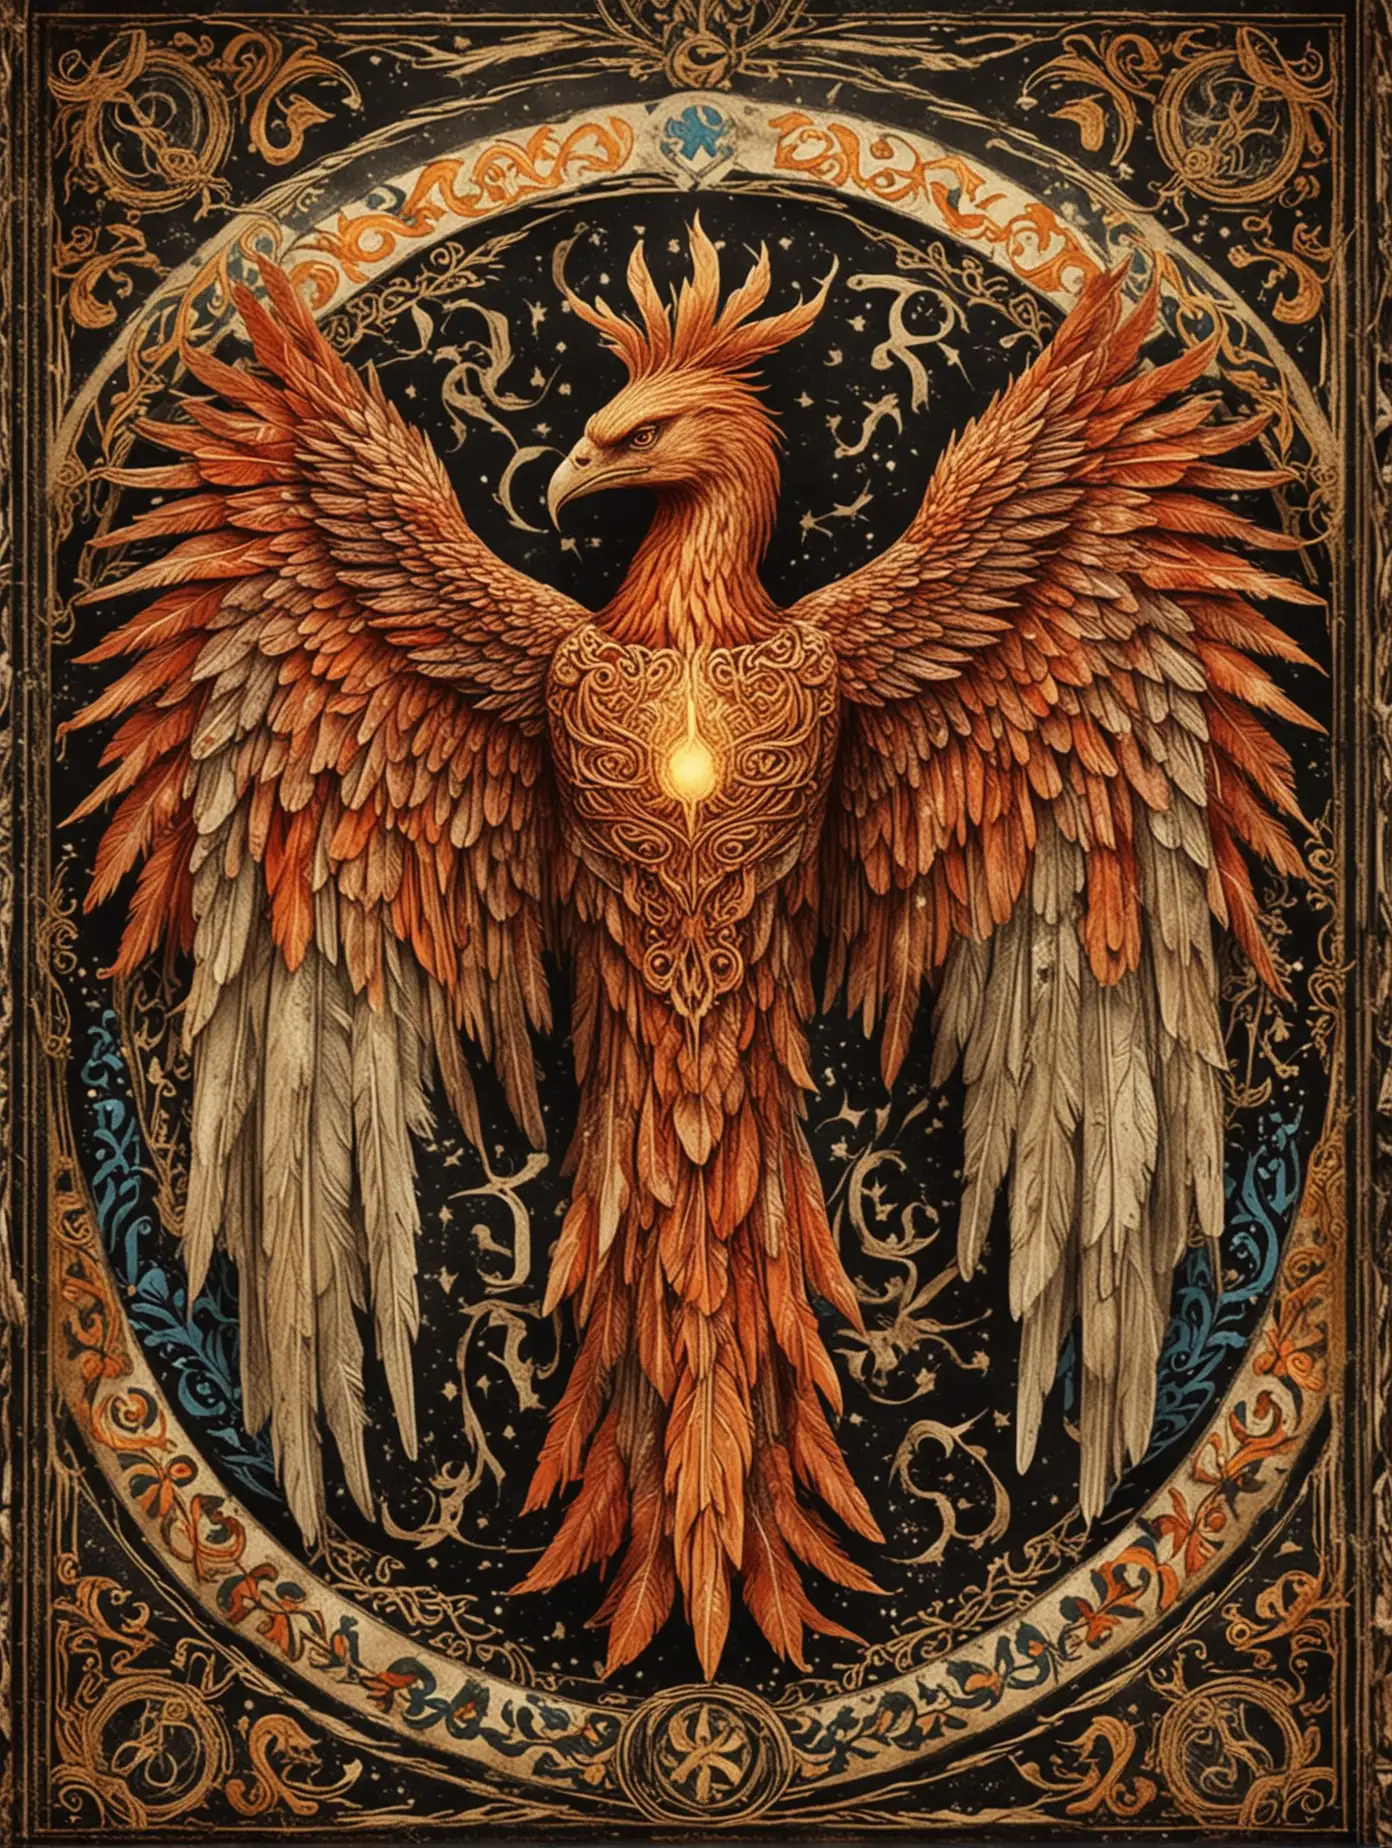 Slavic-Style-Tarot-Card-with-Symmetrical-Phoenix-for-Spiritual-Path